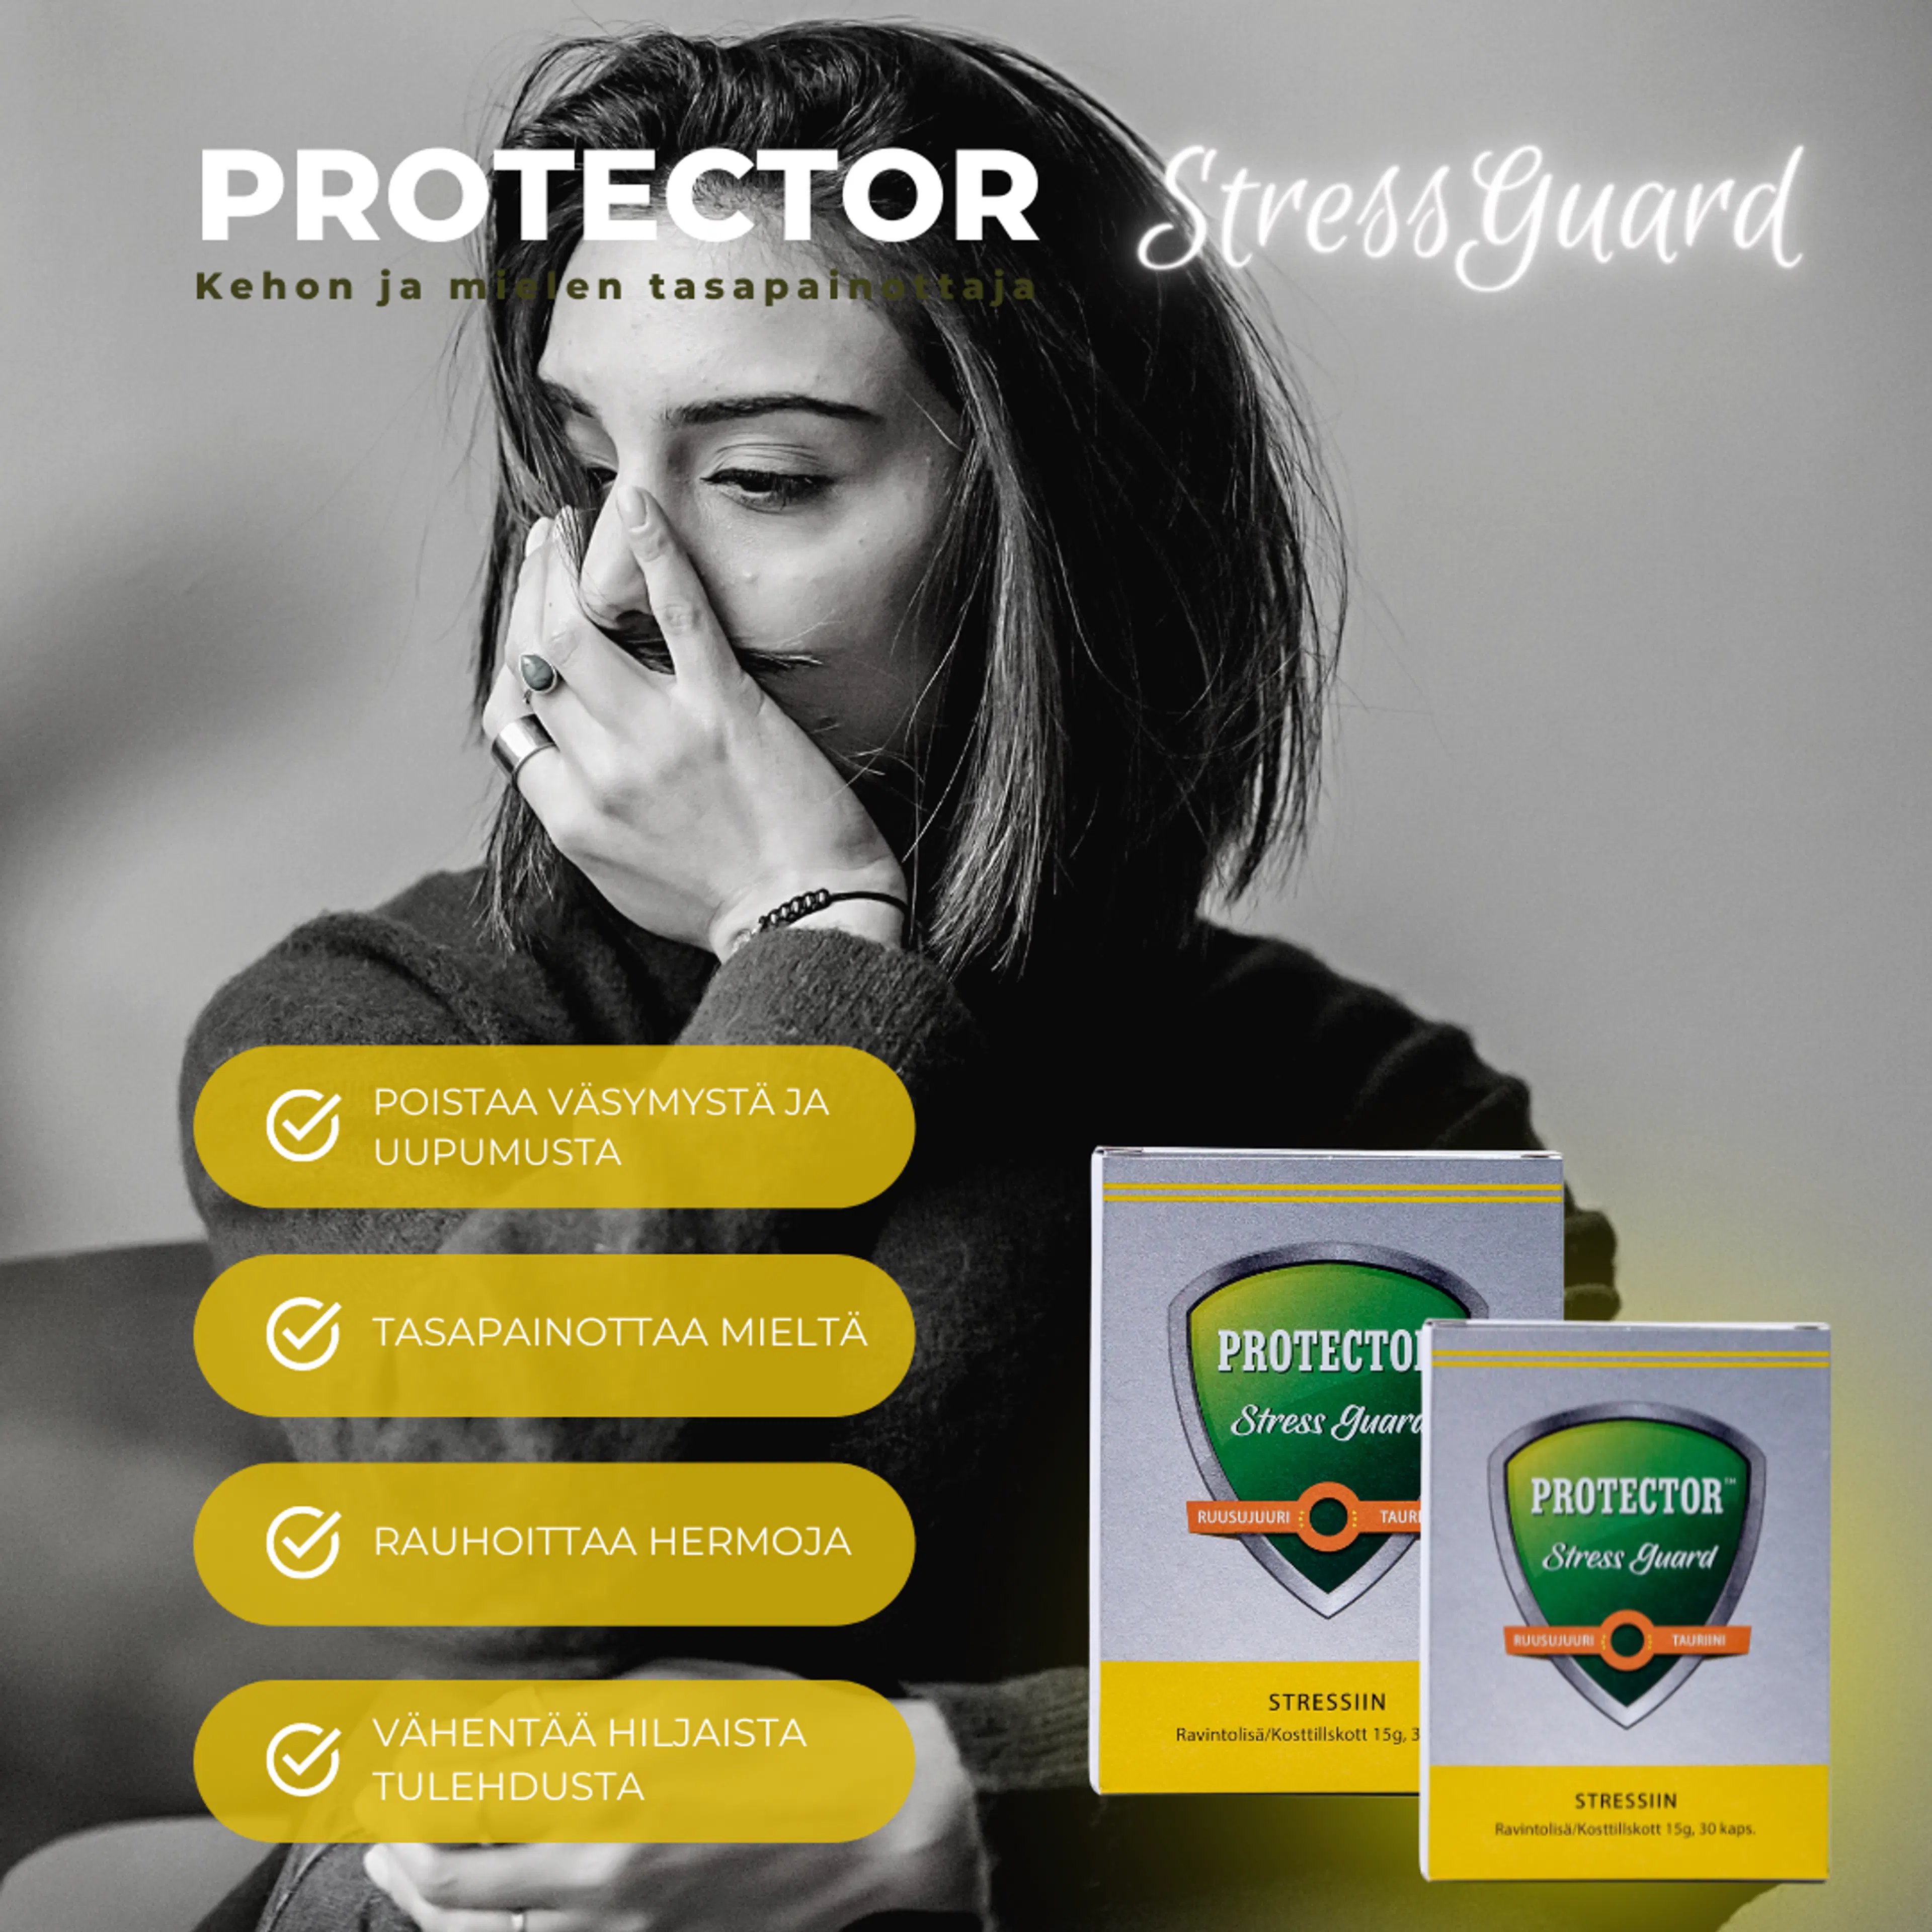 Protector™ Stress Guard Ruusujuuriuute-kaseiini-tauriini-melonikapseli ravintolisä 30 kaps.